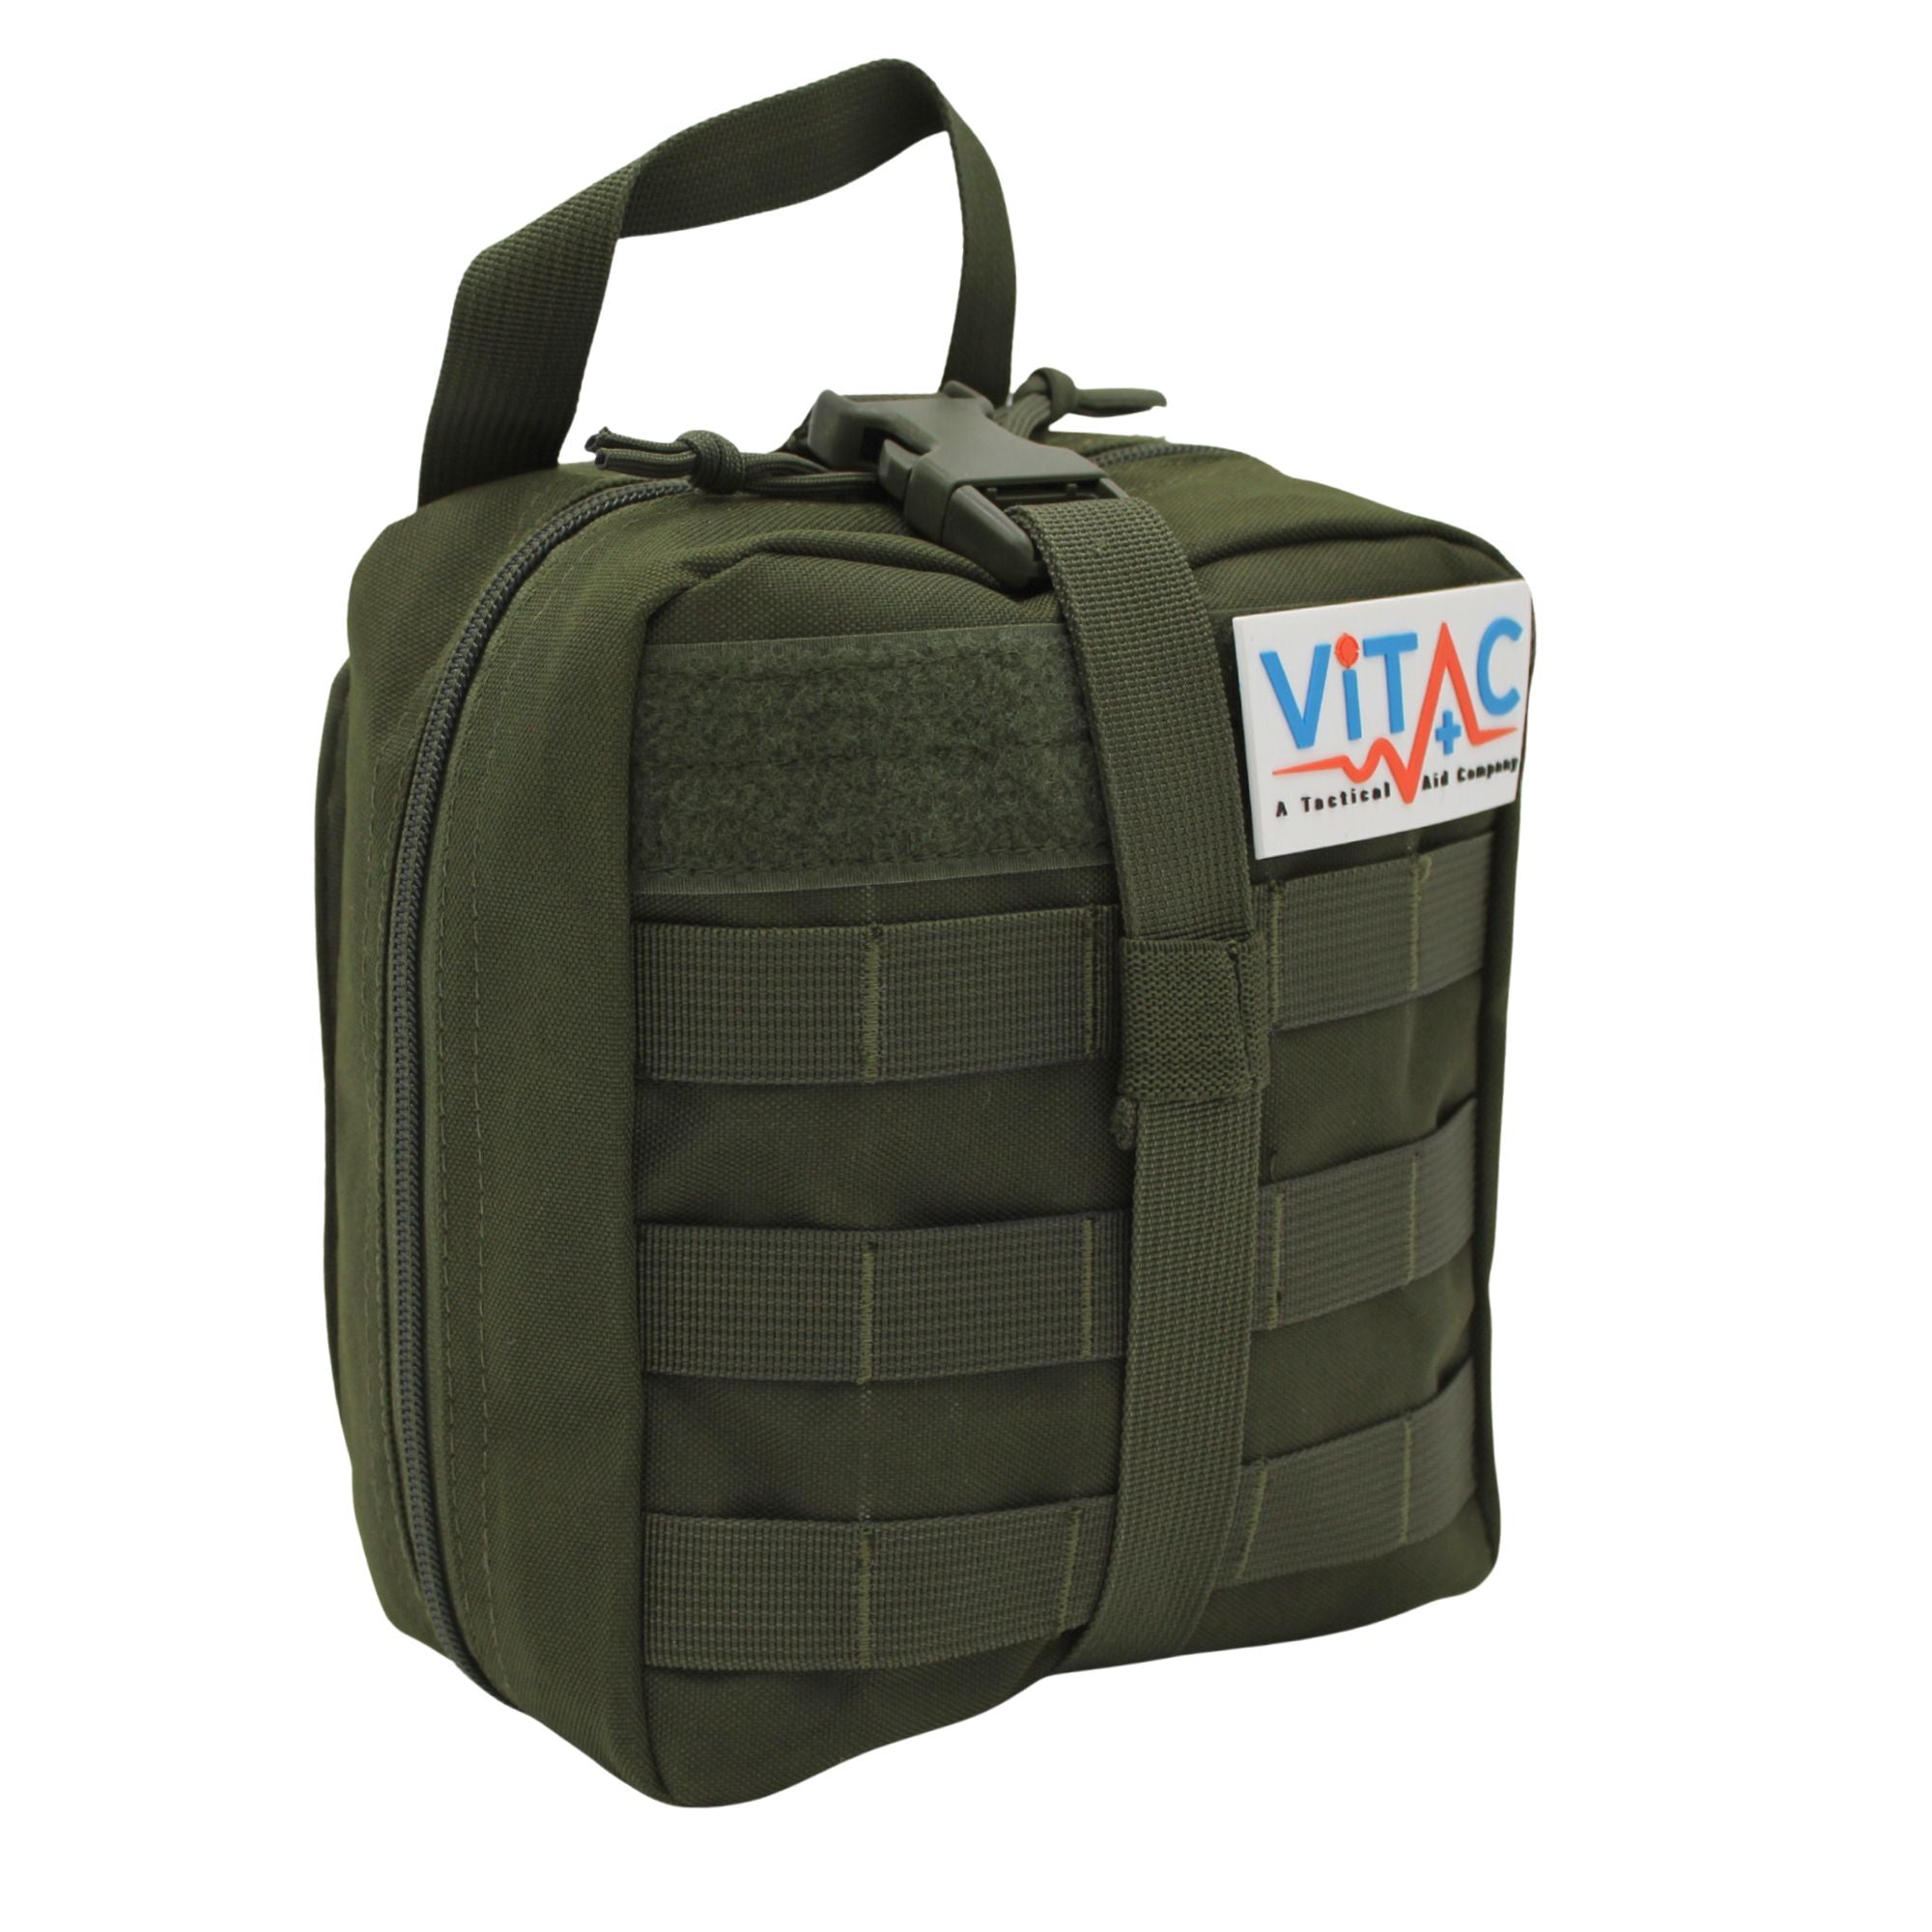 ViTAC Adventurer First Aid Kit Olive Drab